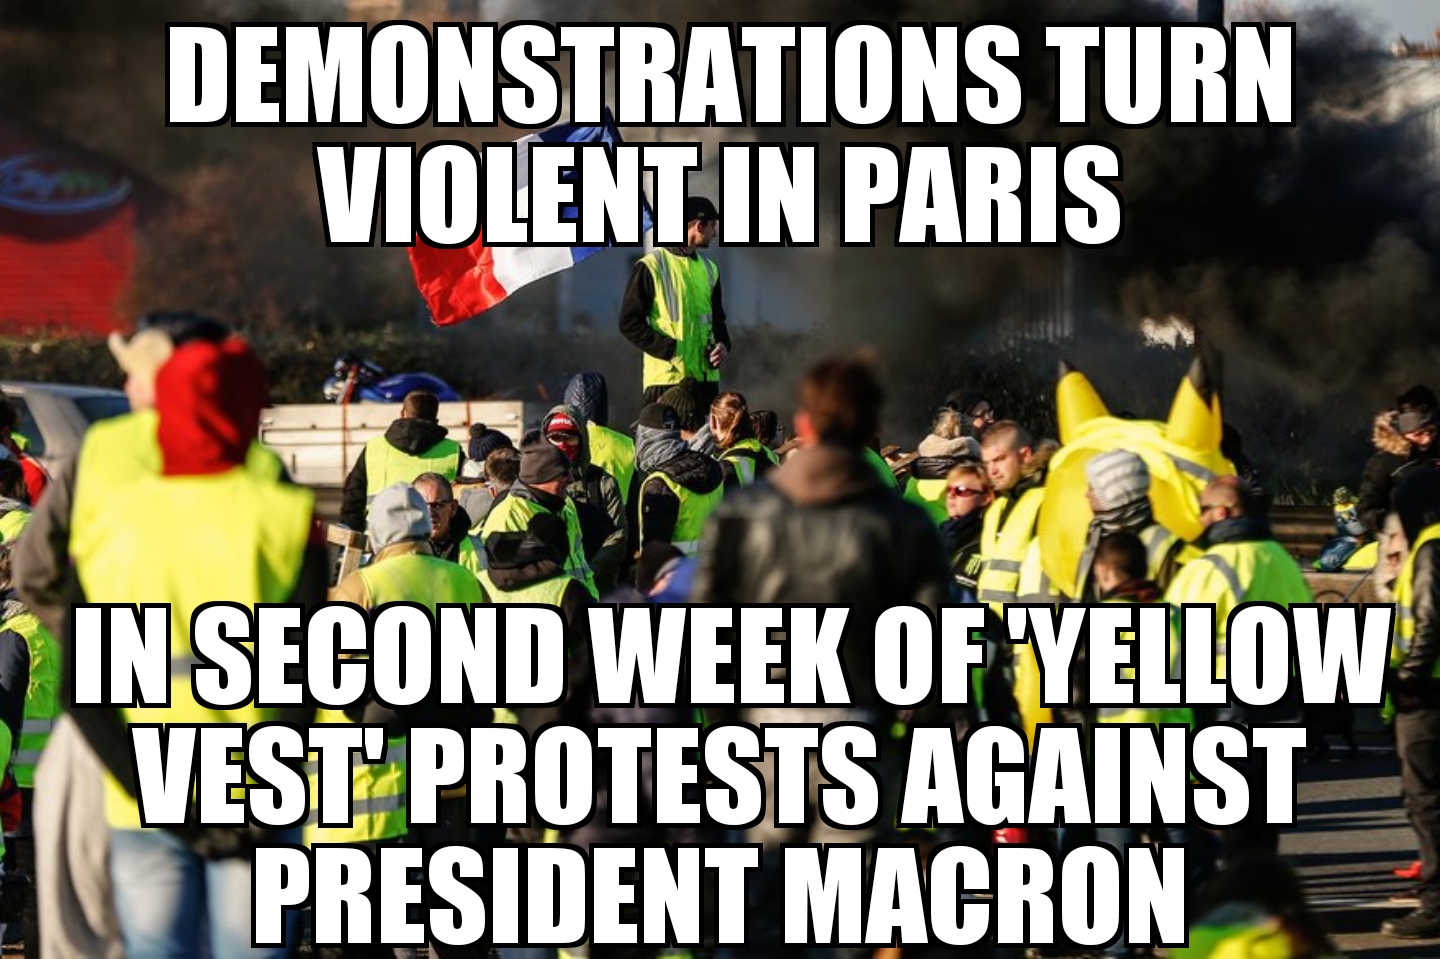 Gilets jaunes protests turn violent in Paris